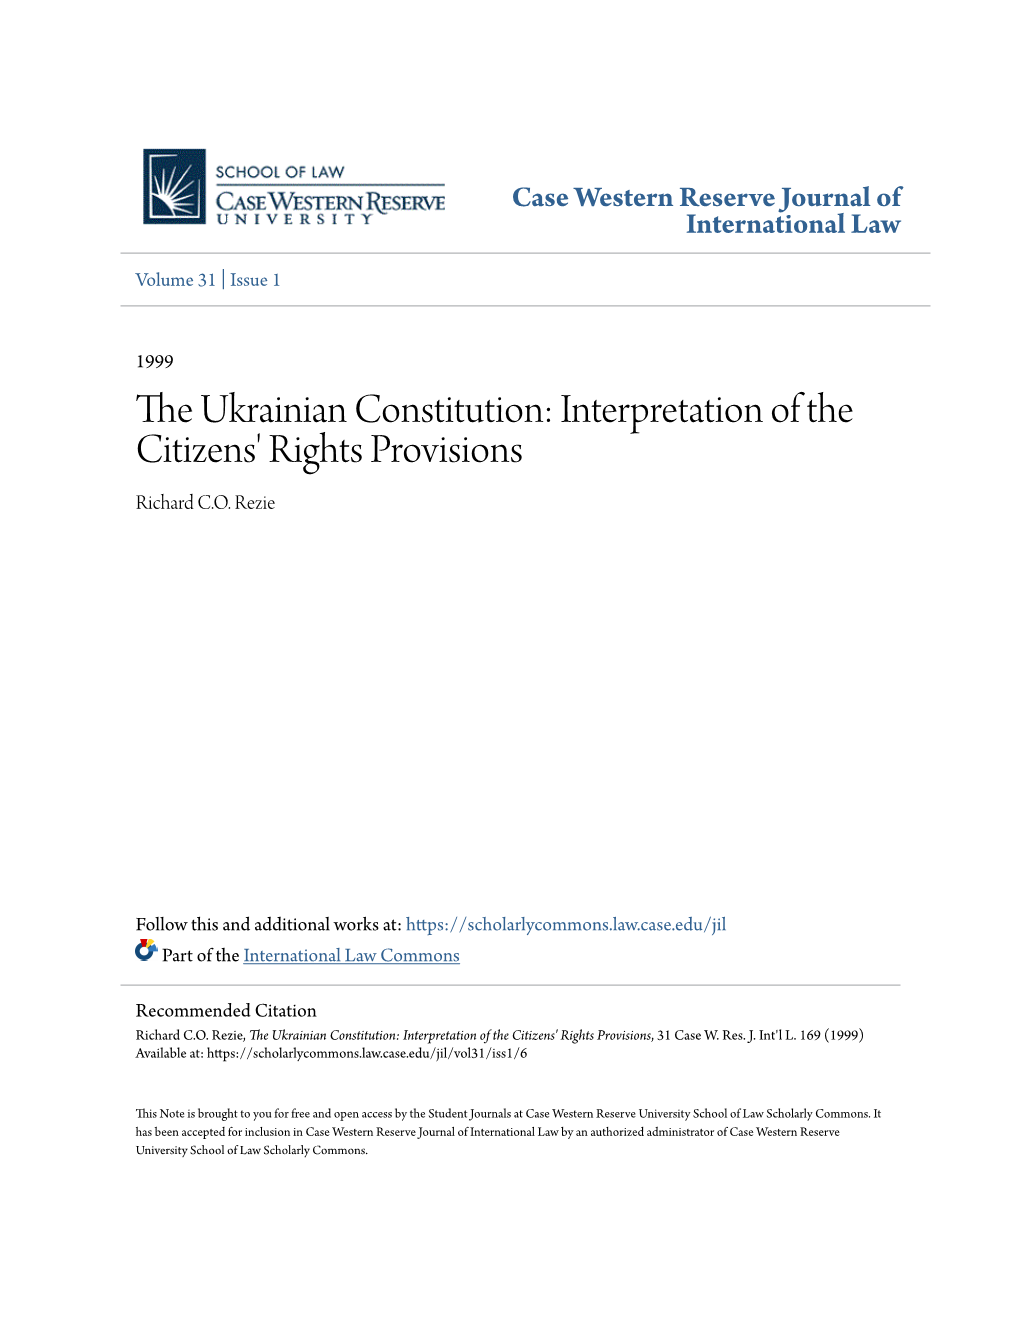 The Ukrainian Constitution: Interpretation of the Citizens' Rights Provisions Richard C.O